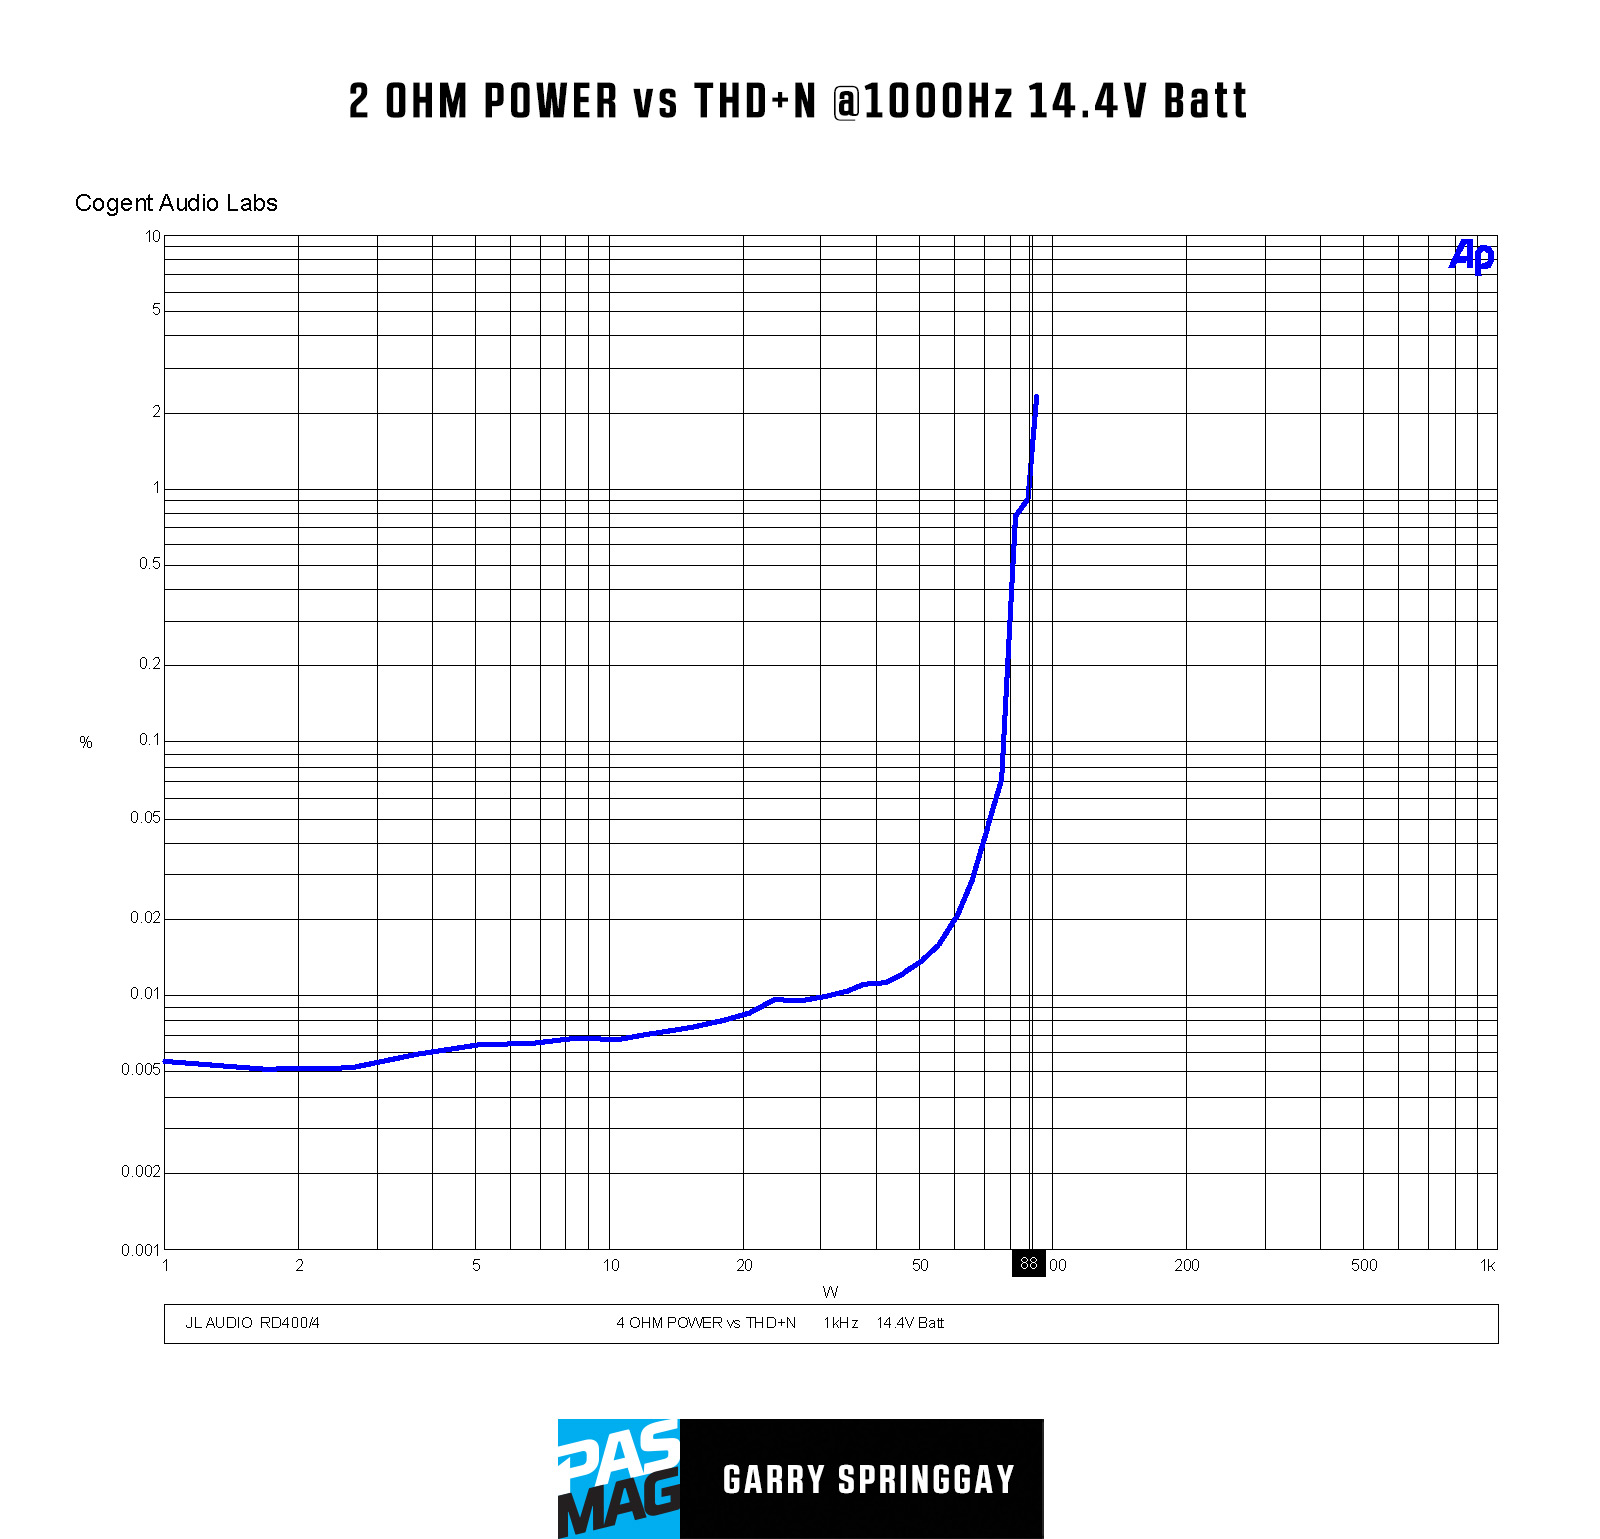 JL Audio RD400 4 Graph01 4OHM